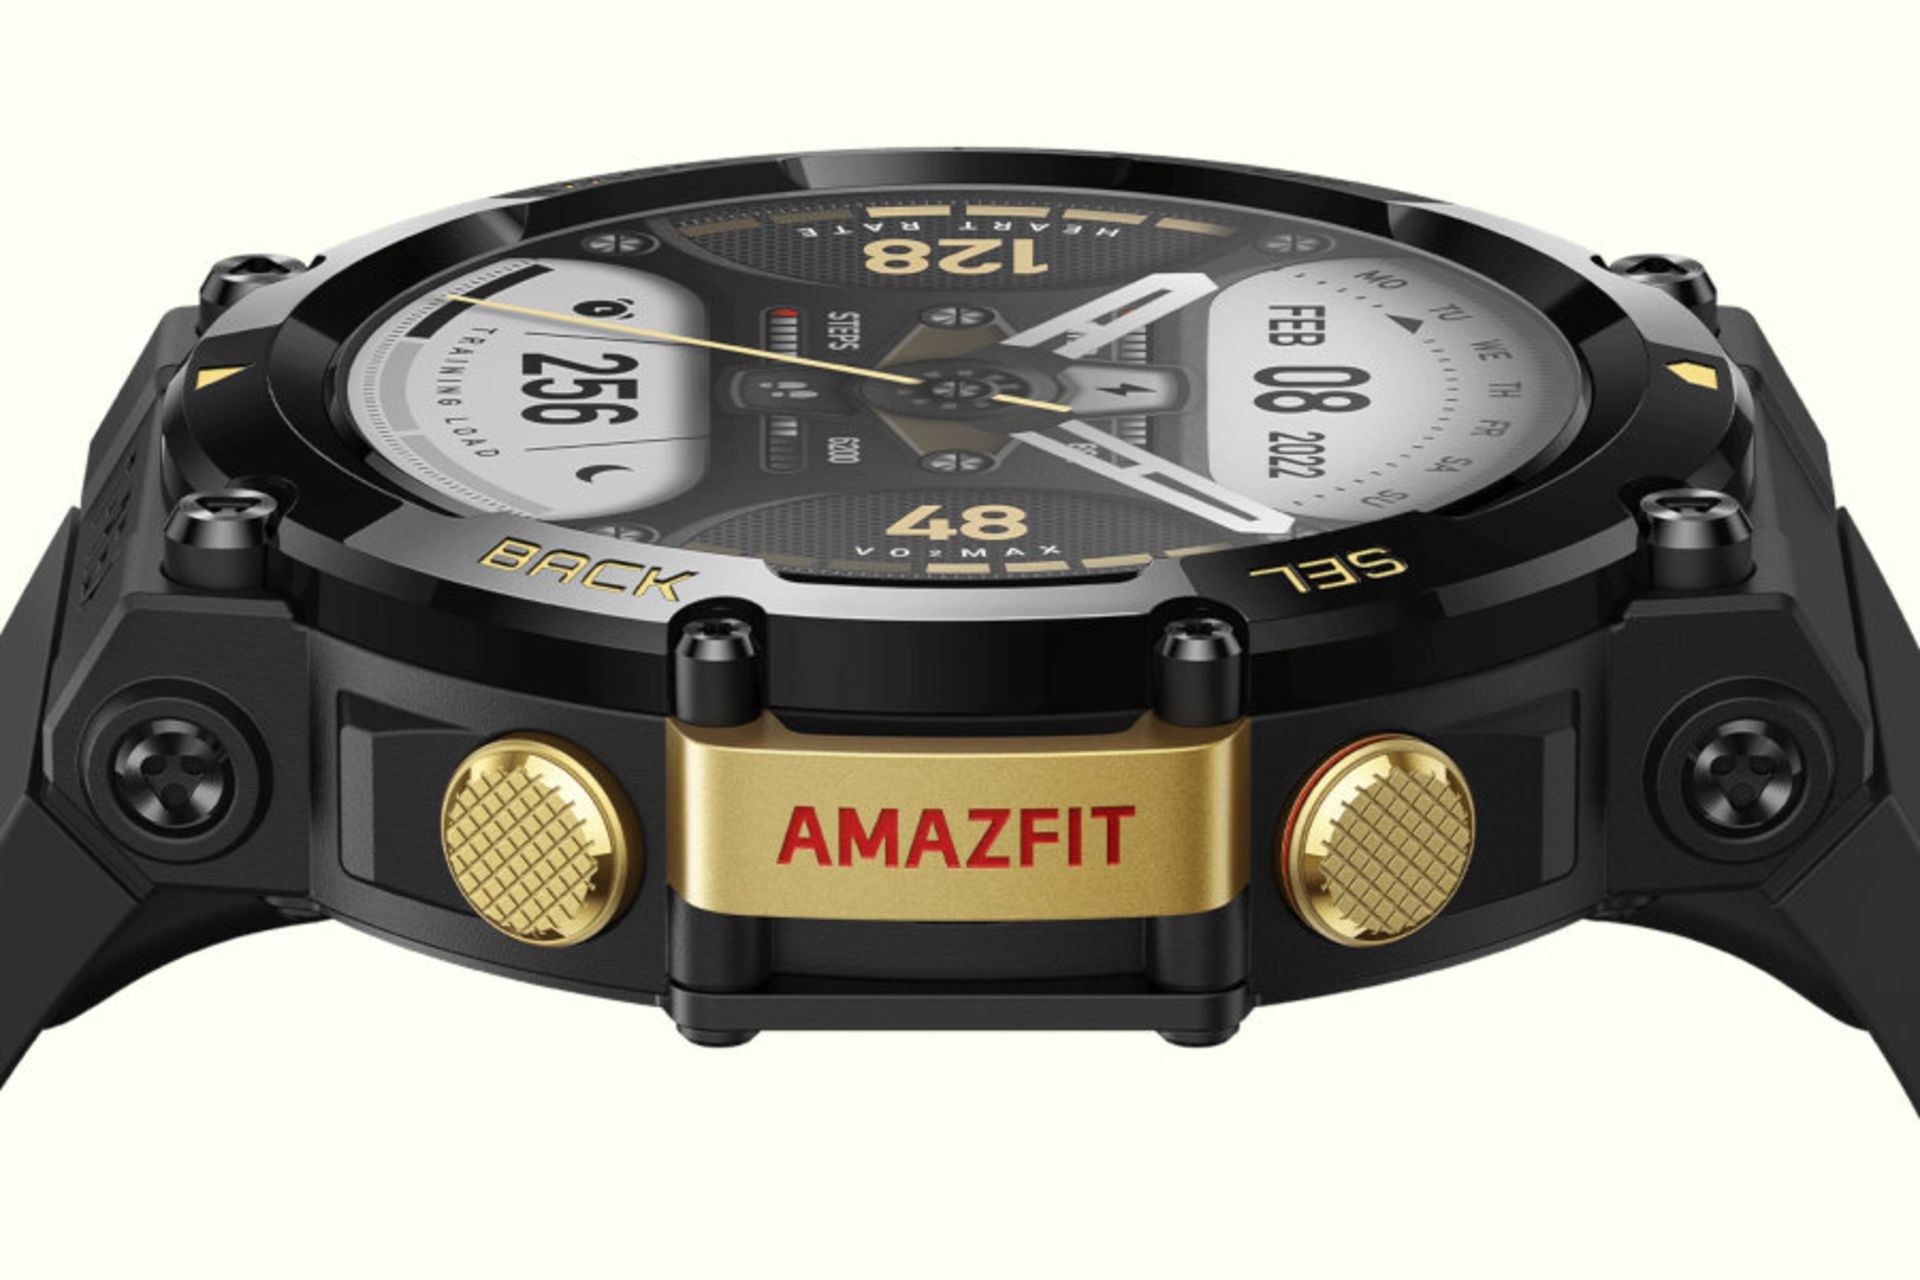 مرجع متخصصين ايران ارزش ساعت اميزفيت Amazfit T-Rex 2 در بخش محصولات اخبار تخصصي، علمي، تكنولوژيكي، فناوري مرجع متخصصين ايران